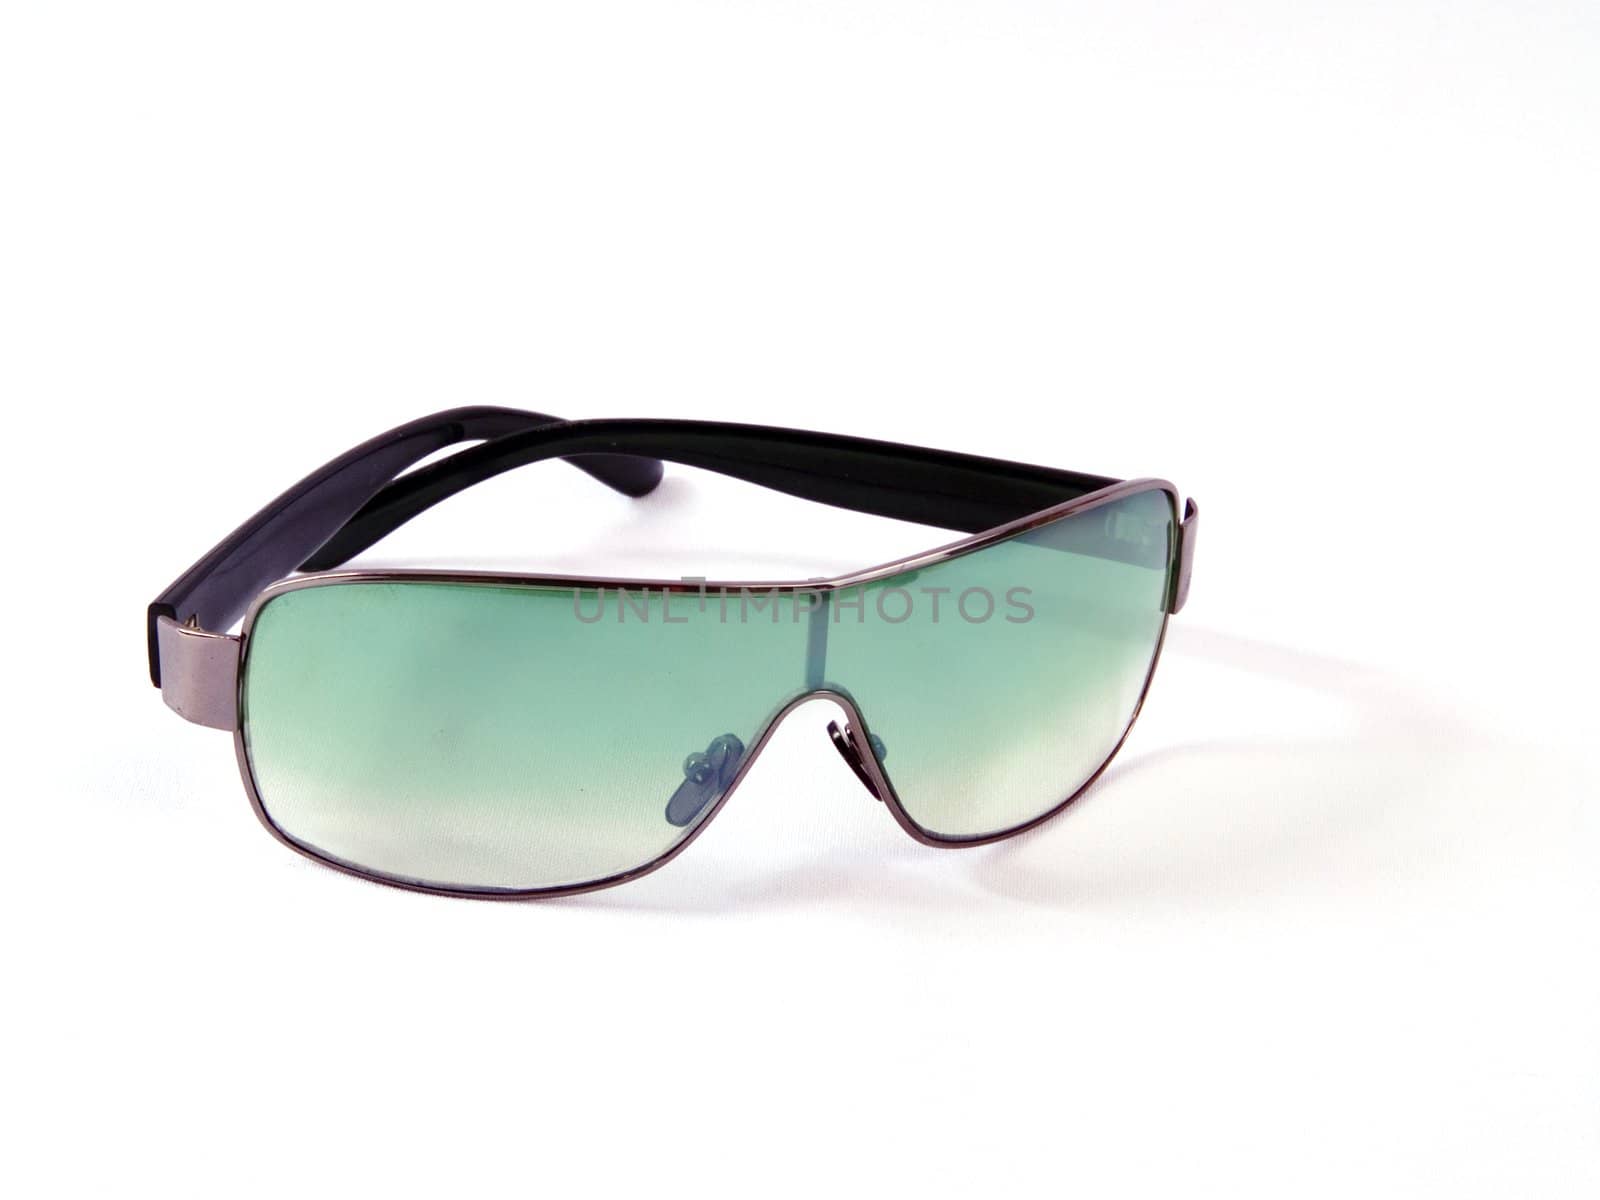 Sunglasses green